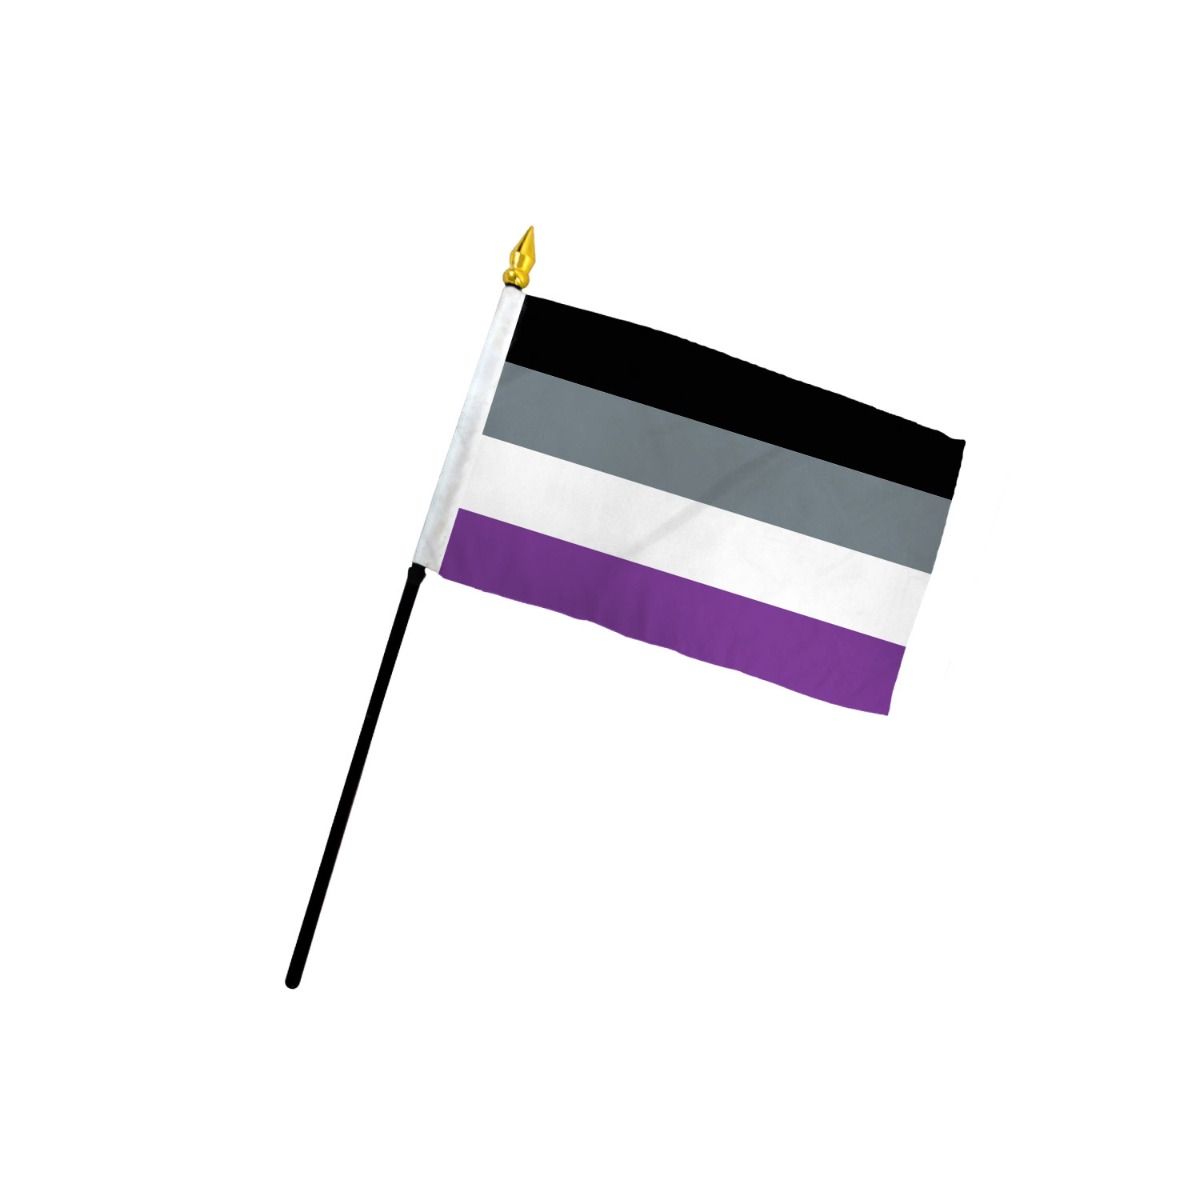 Asexual 4" x 6" Single Hand Flag